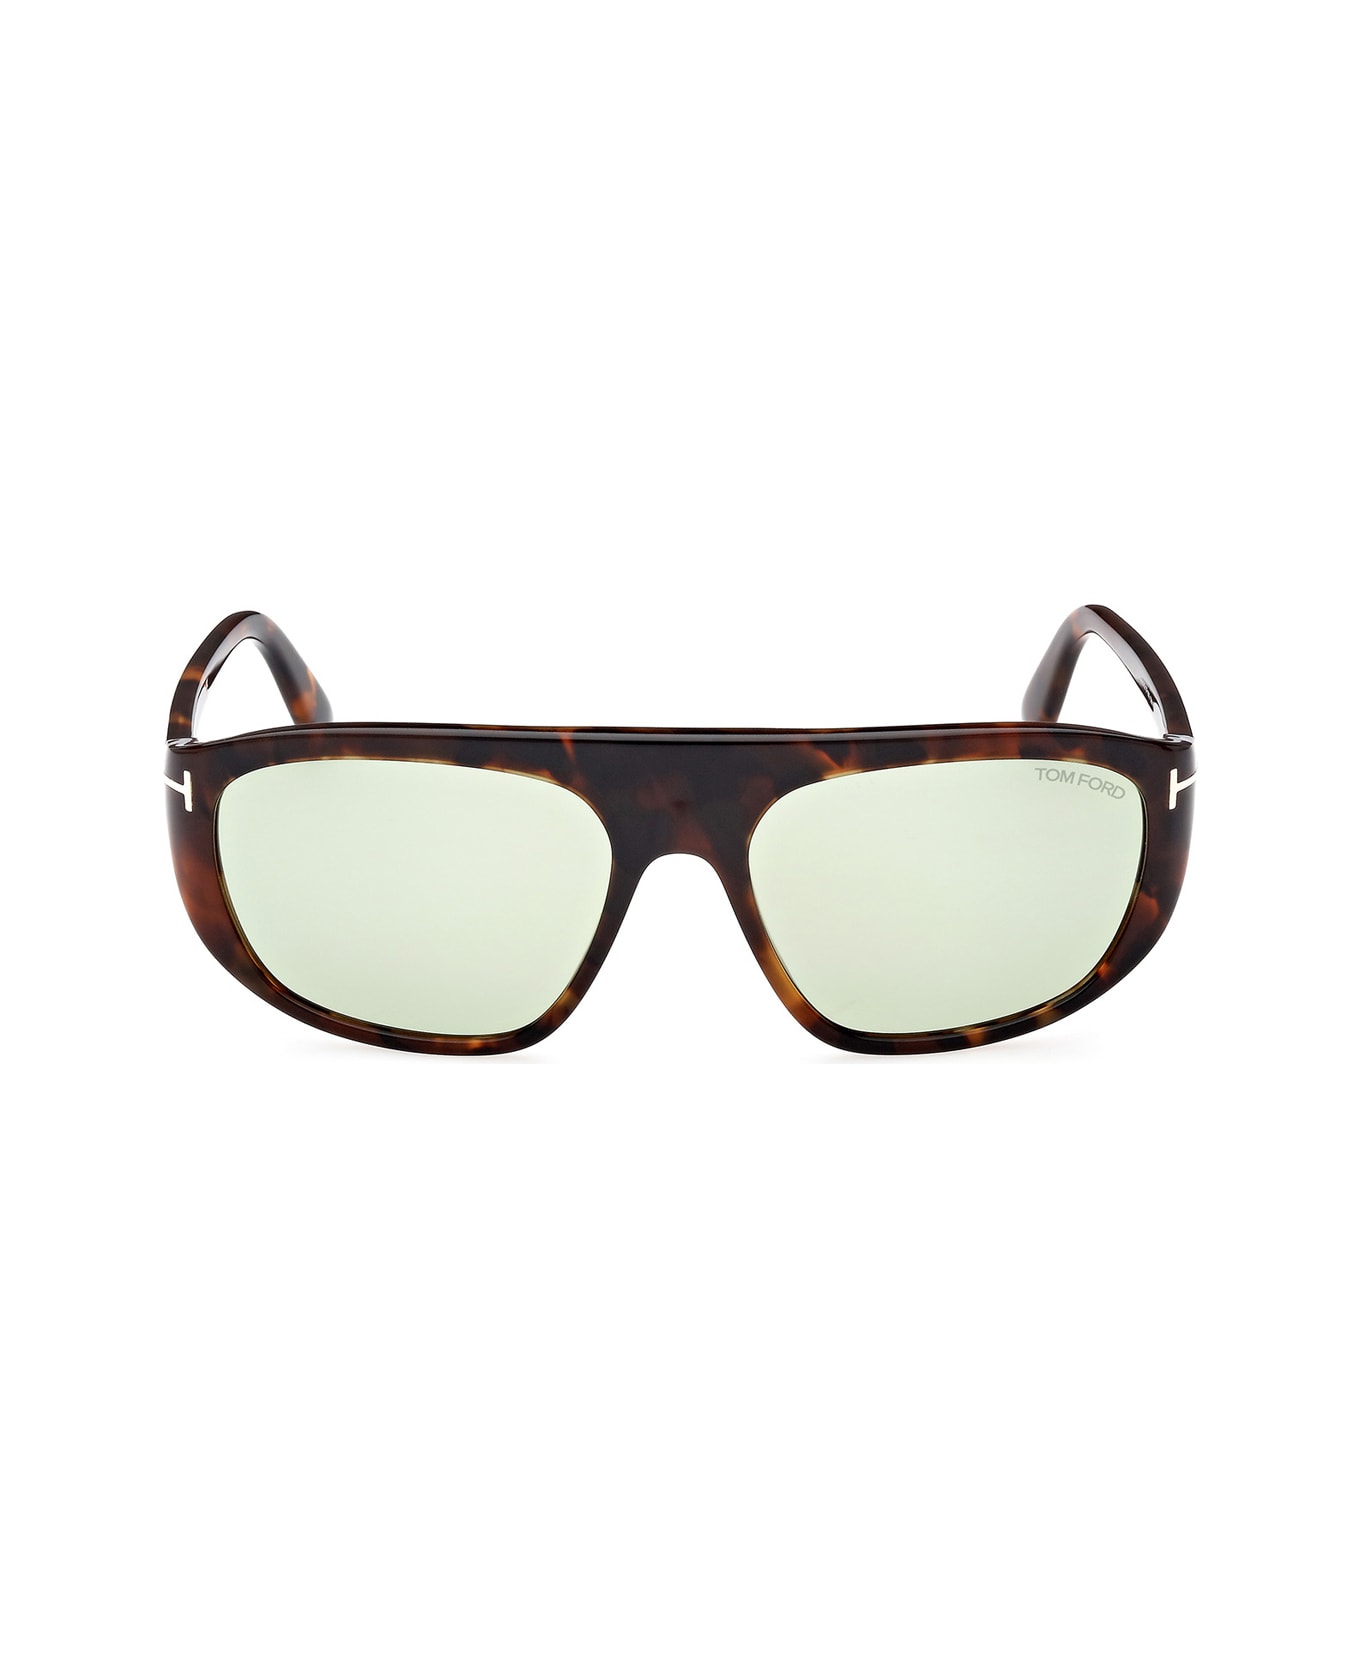 Tom Ford Eyewear Ft1002 Sunglasses - Marrone